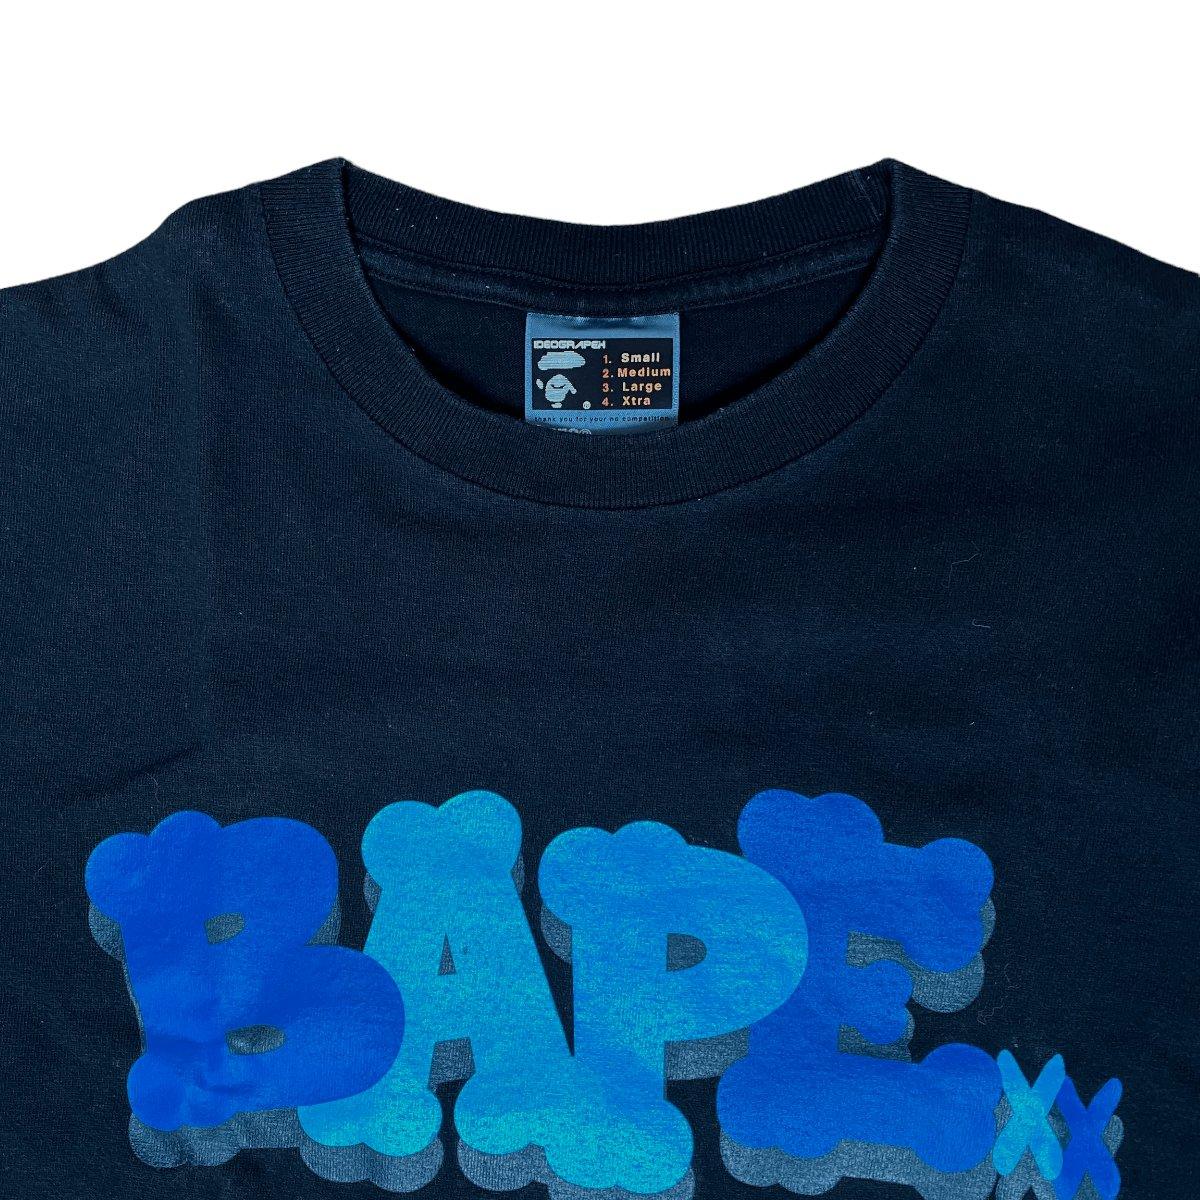 A BATHING APE x KAWS logo short sleeve T-shirt Black (S) - Known Source